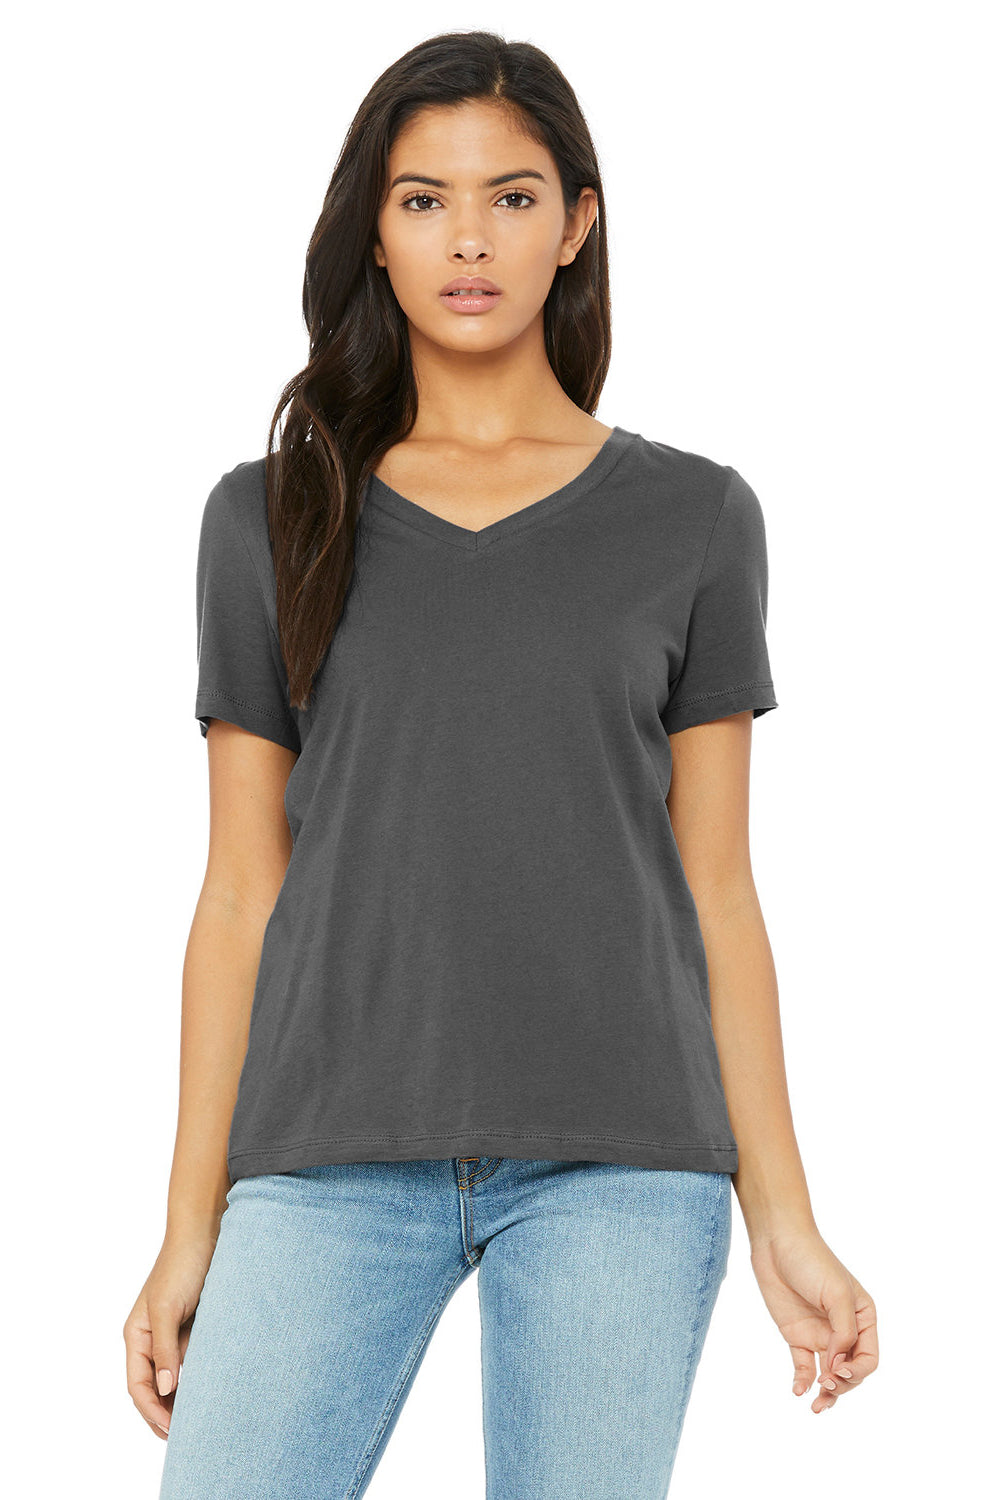 Bella + Canvas BC6405/6405 Womens Relaxed Jersey Short Sleeve V-Neck T-Shirt Asphalt Grey Model Front